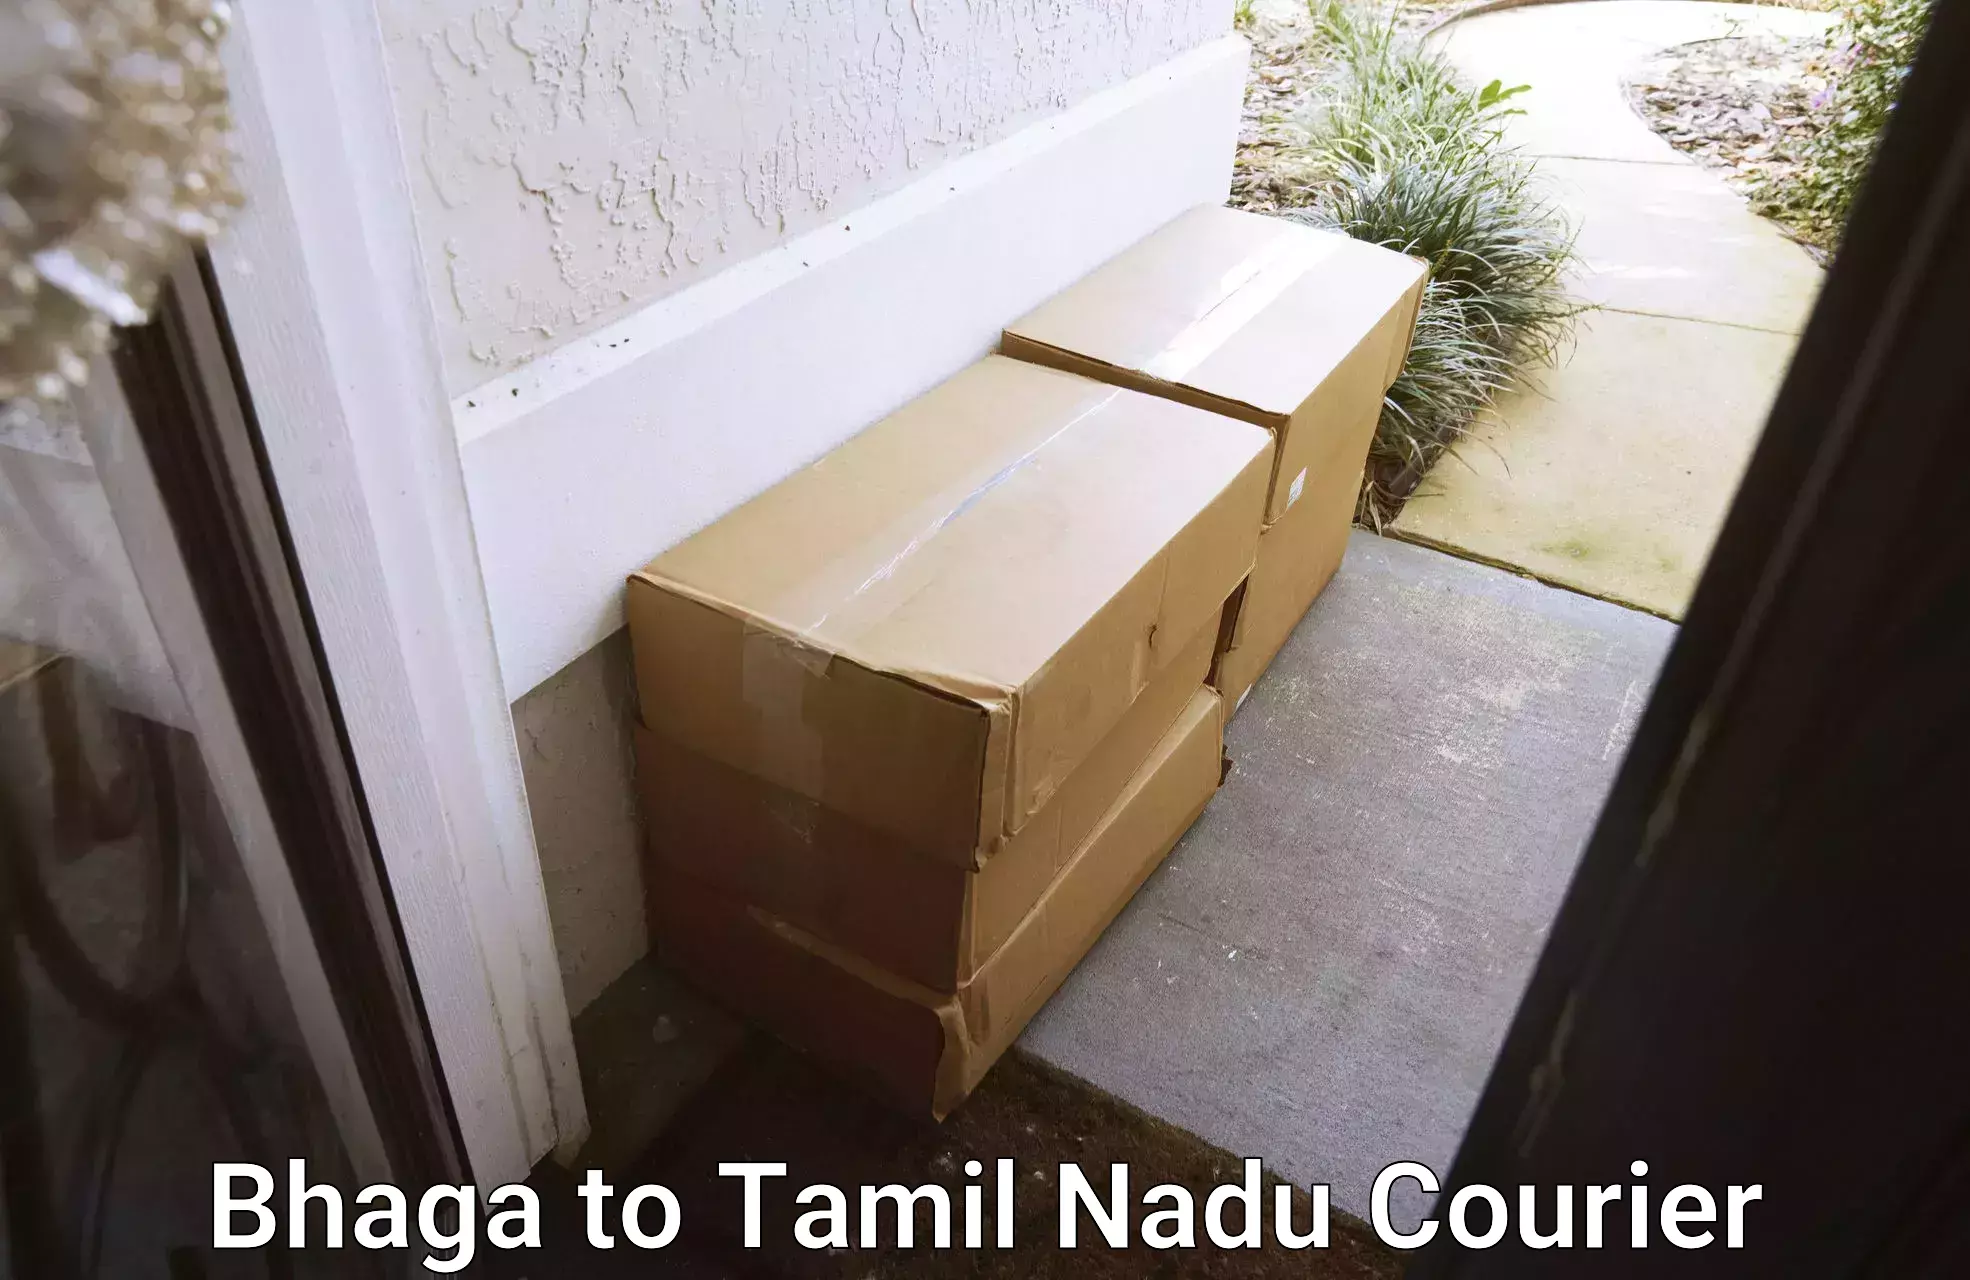 Flexible delivery schedules Bhaga to Tamil Nadu